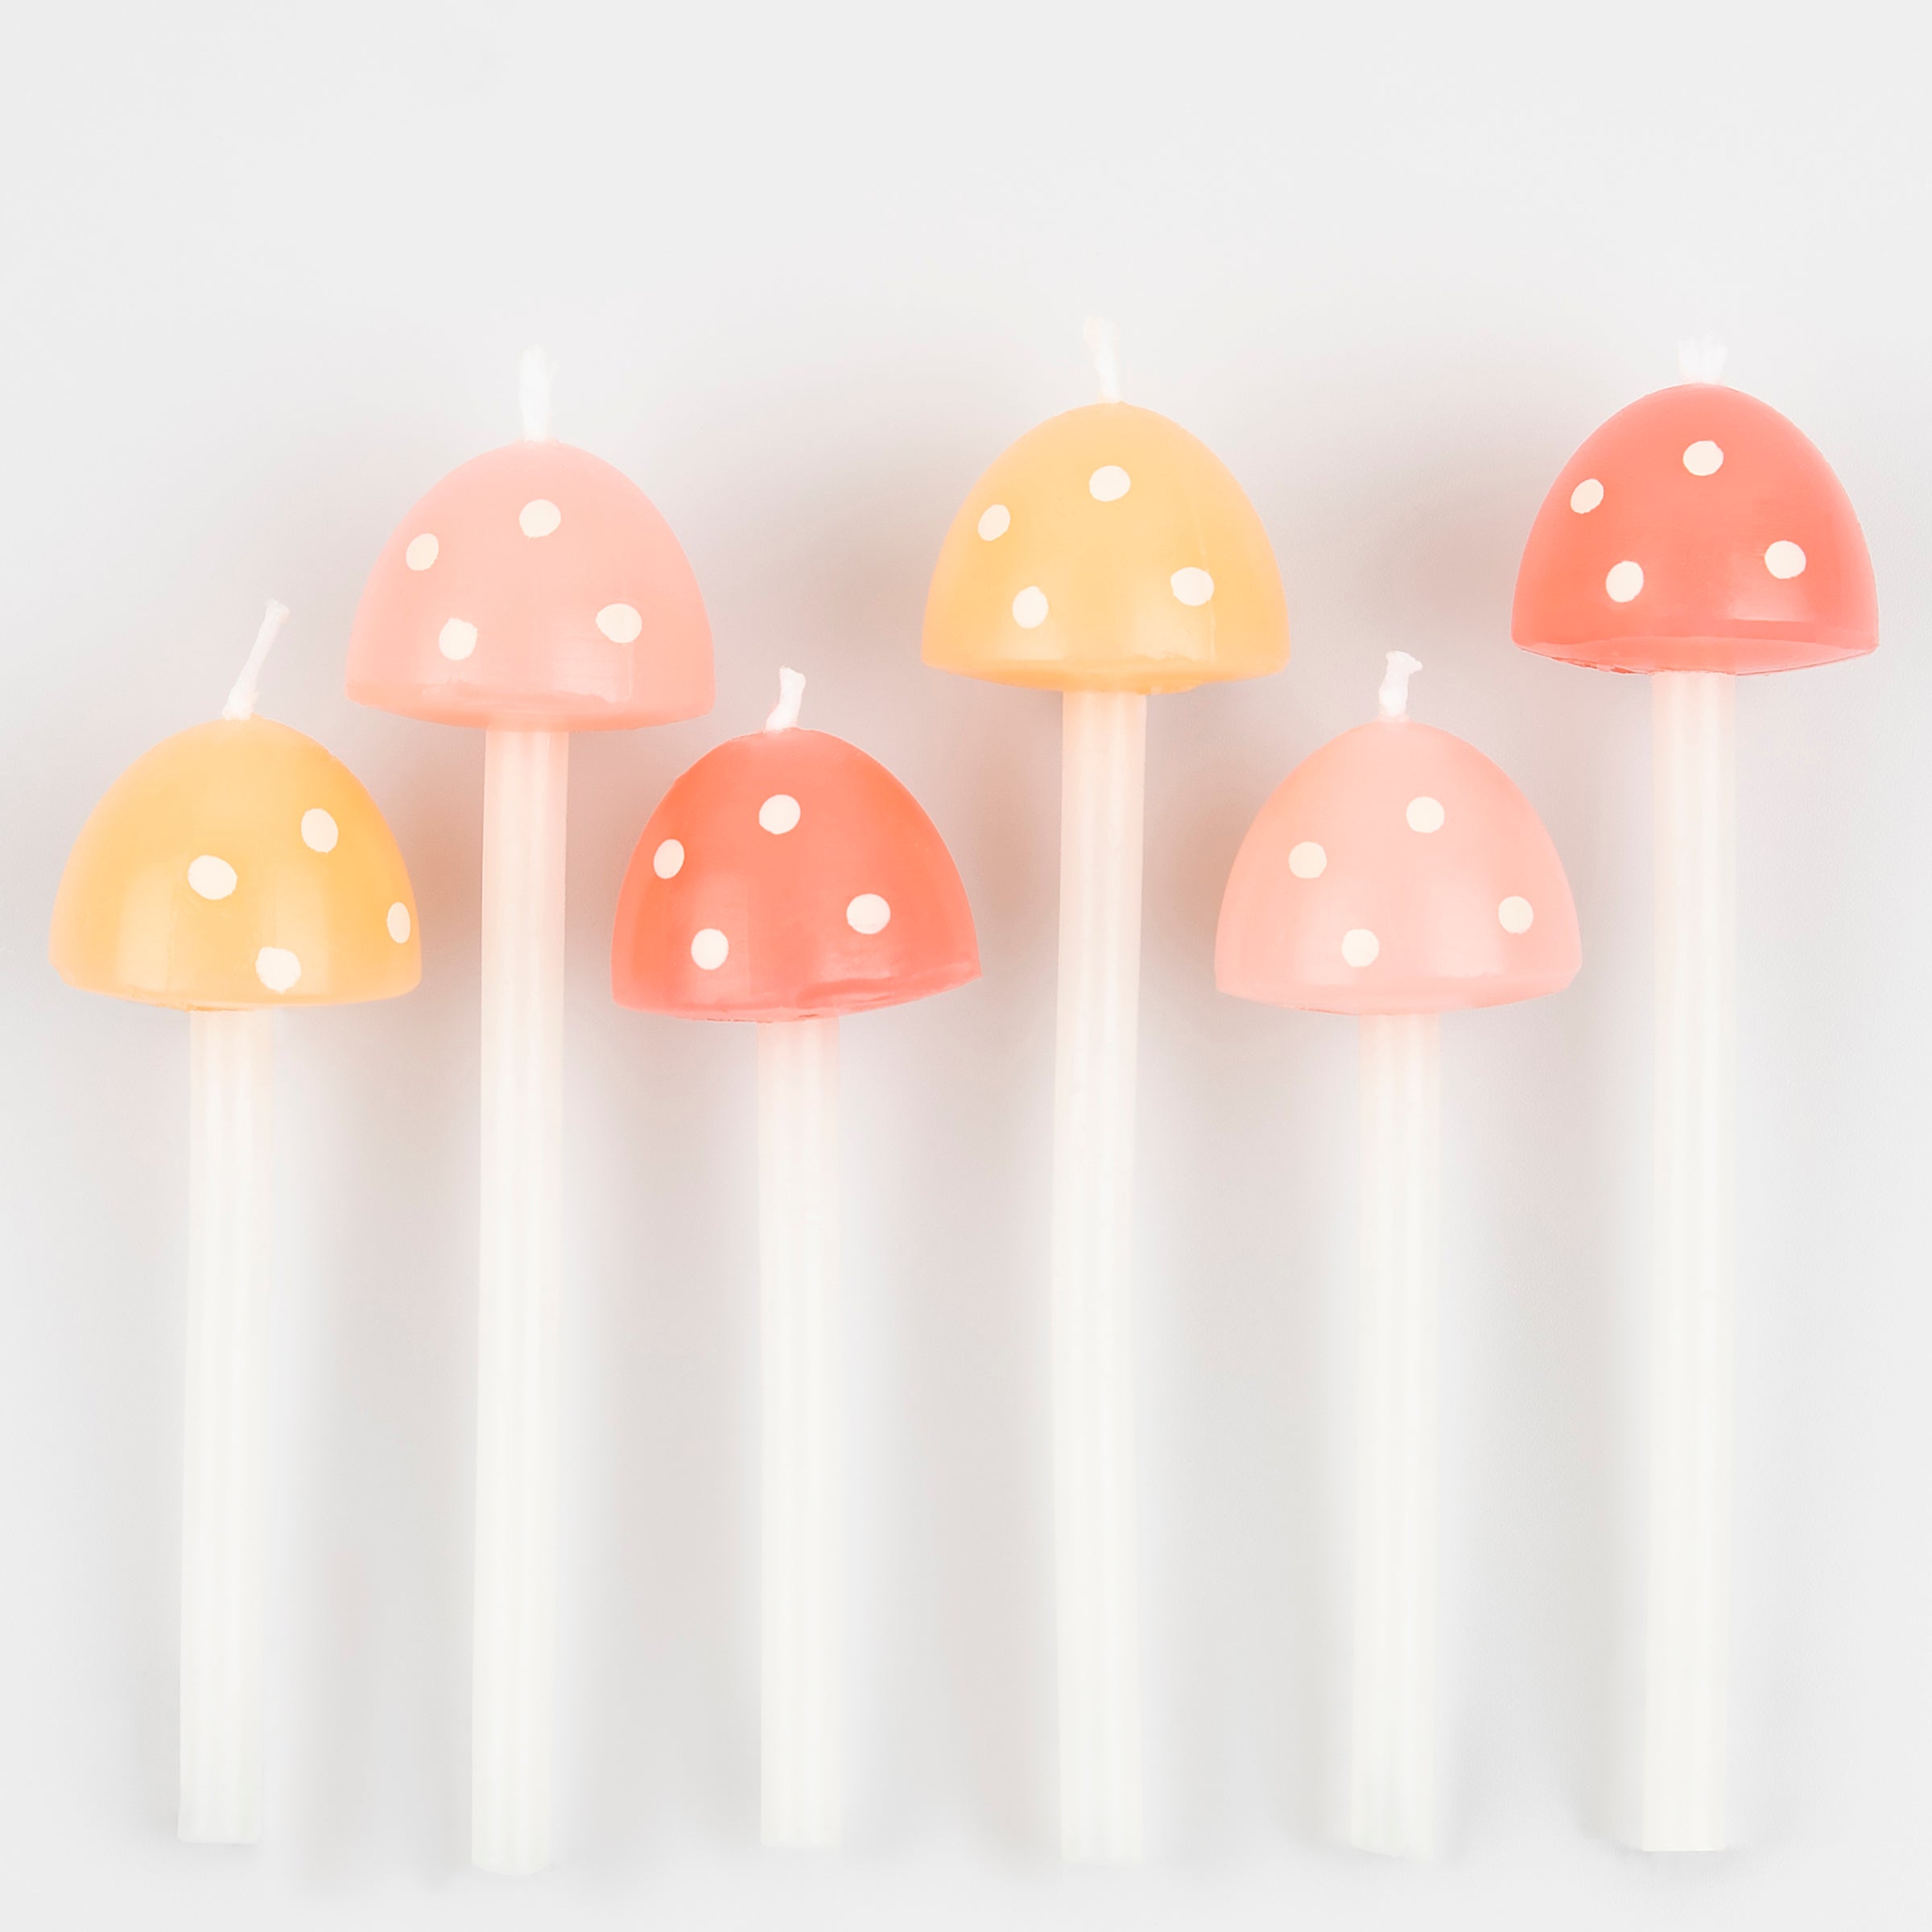 Mushroom Candles (Set of 3)